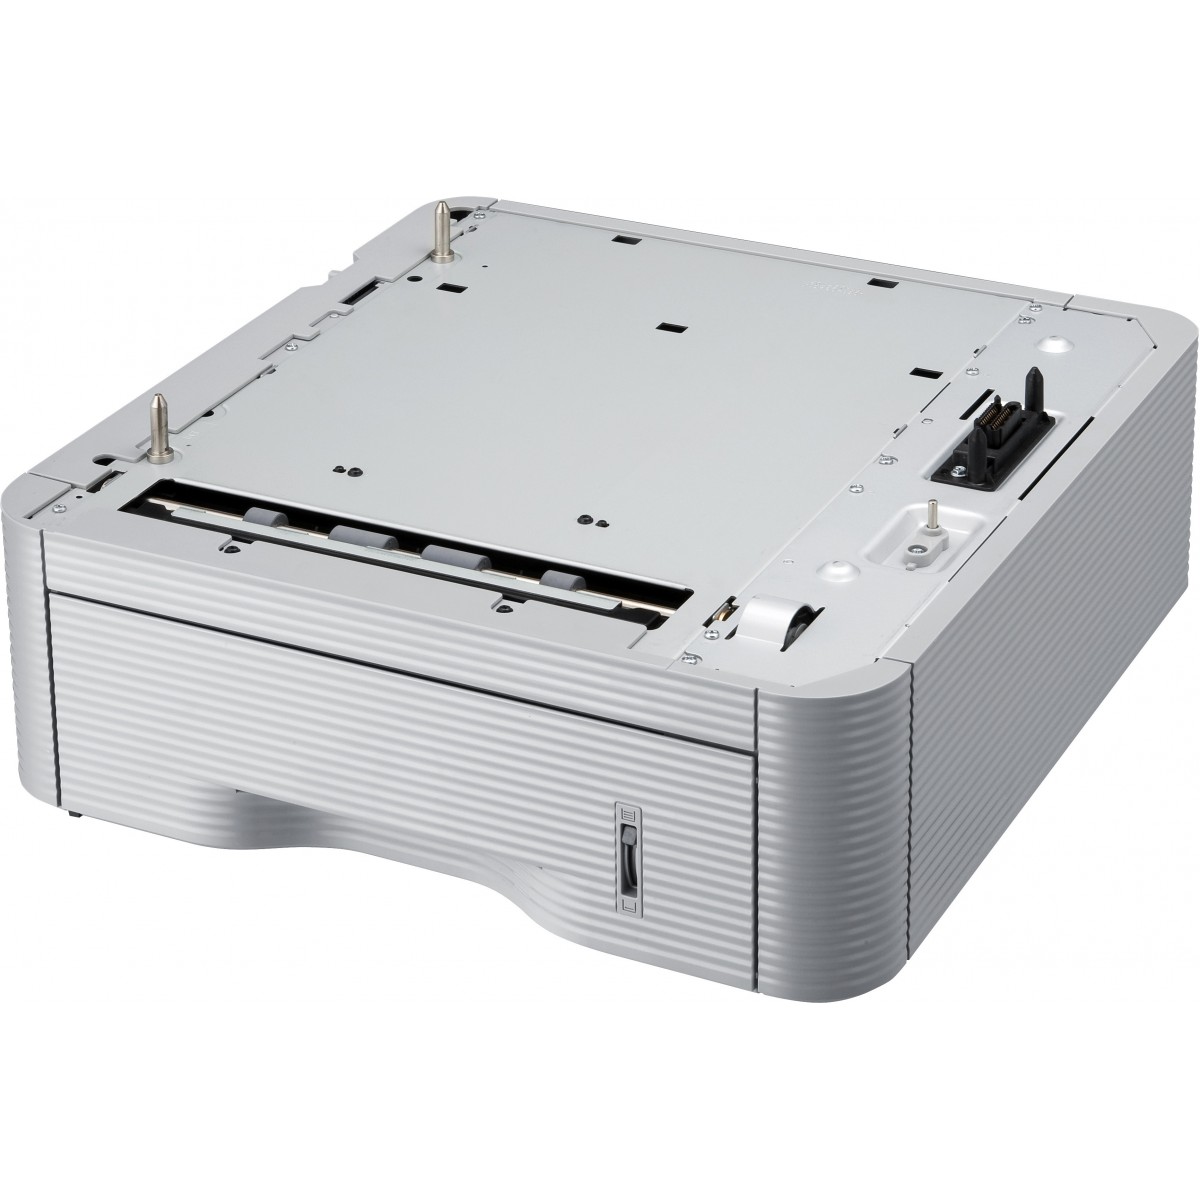 HP CLP-S775A - Cassette feeder - Multifunctional - Samsung - CLP-775ND - White - 446 mm